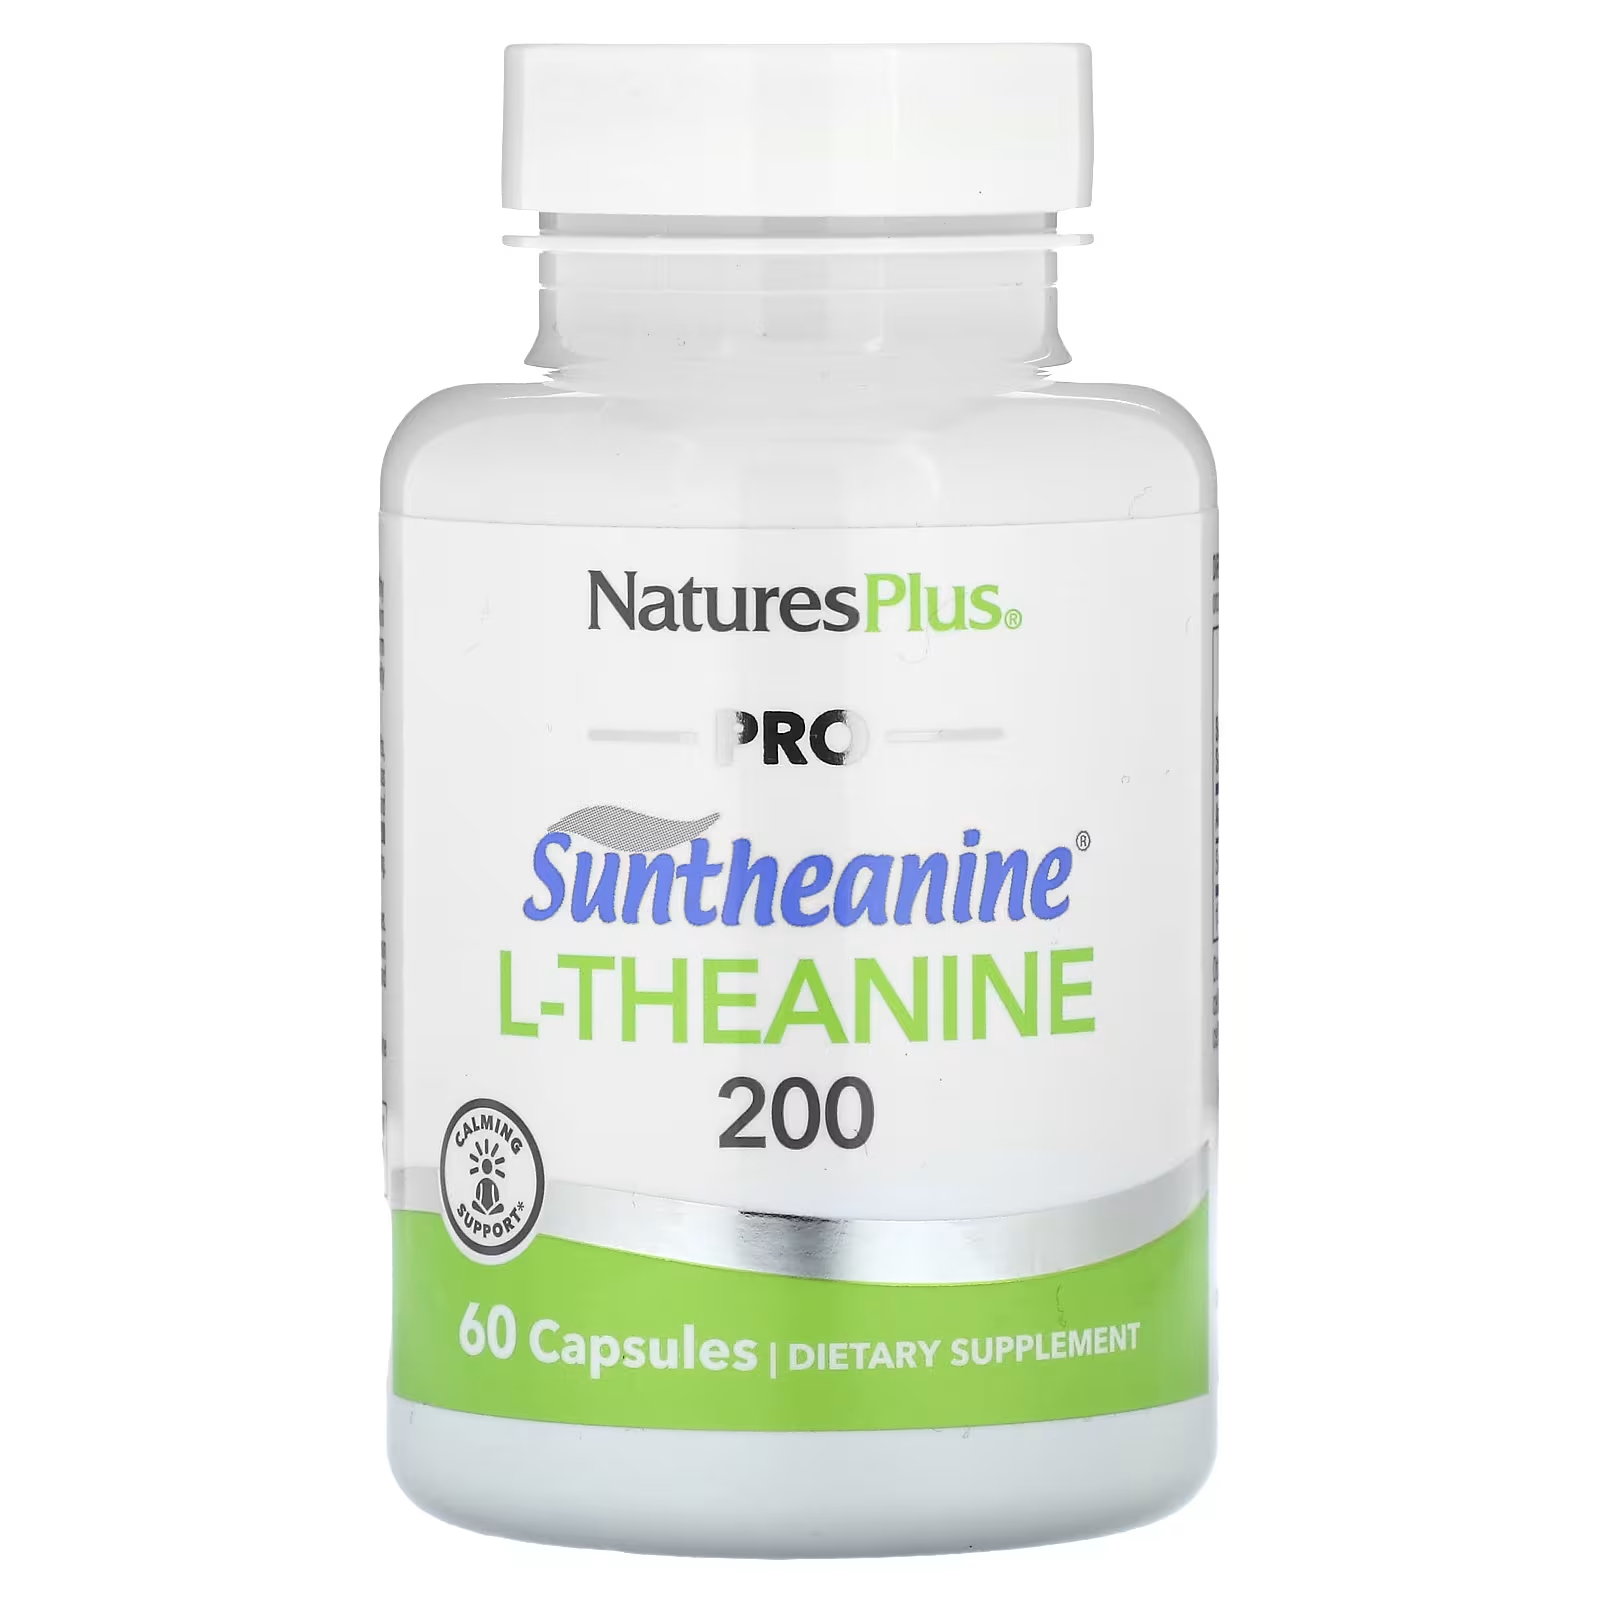 Pro Suntheanine L-Теанин 200 100 мг 60 капсул NaturesPlus naturesplus pro dim 200 60 капсул